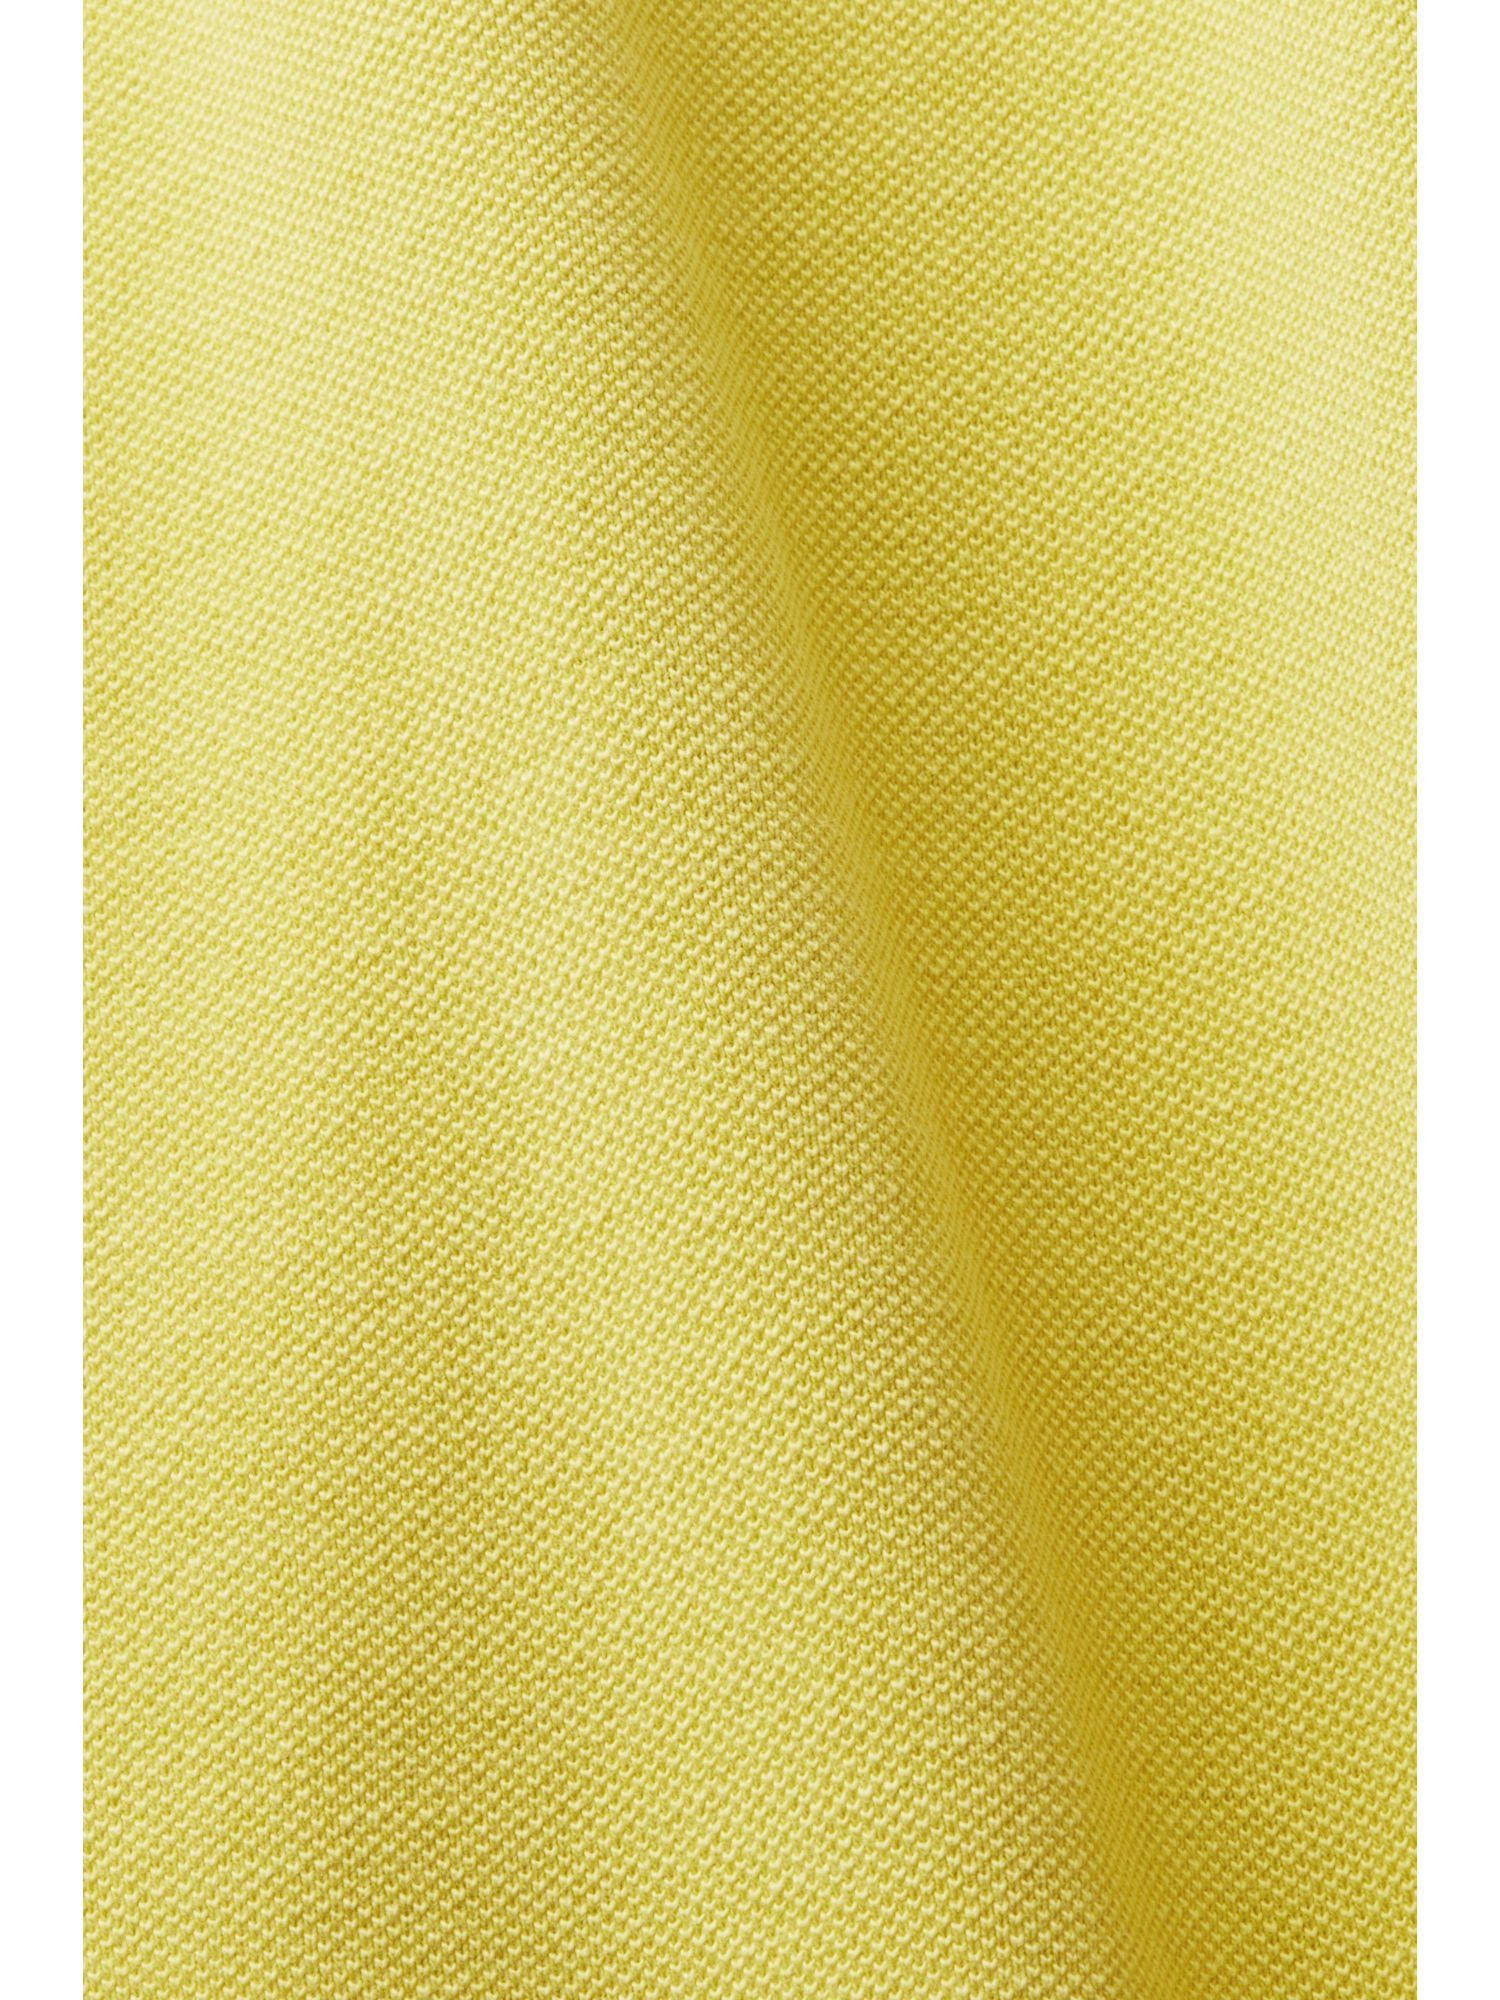 YELLOW Esprit Poloshirt DUSTY Poloshirt Stone-Washed-Baumwollpikee aus